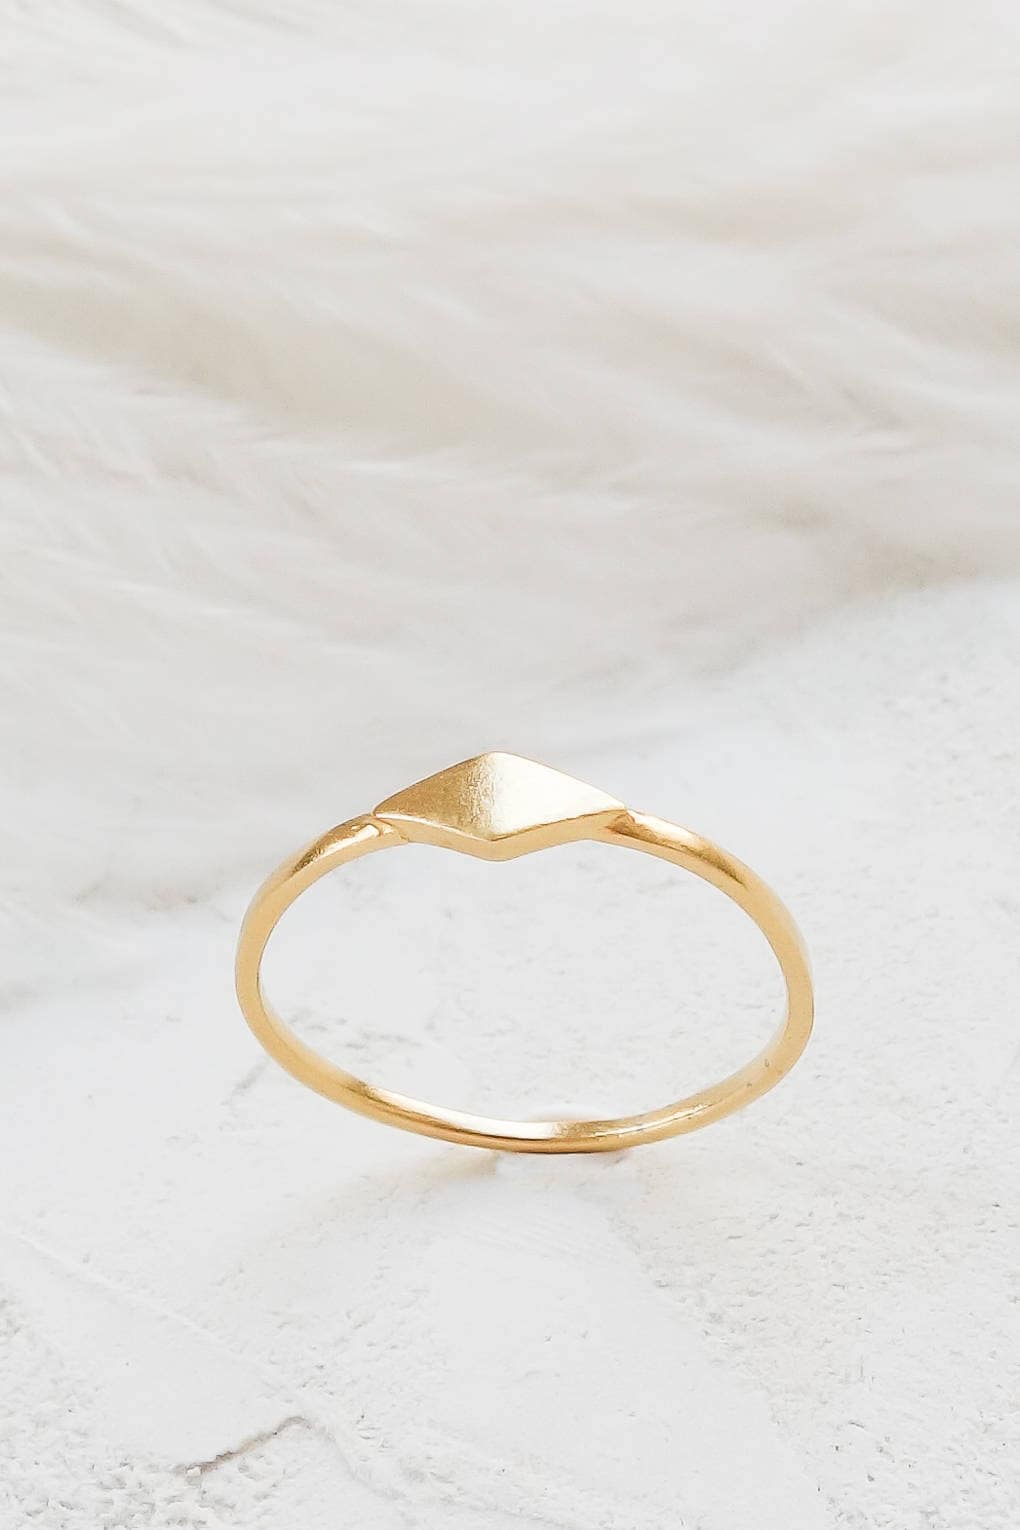 Massiver Gold Rhombus Ring, Verlobungsring, Hochzeit Goldring, Jubiläumsring, Unikat Alternative von ShlomitOfir